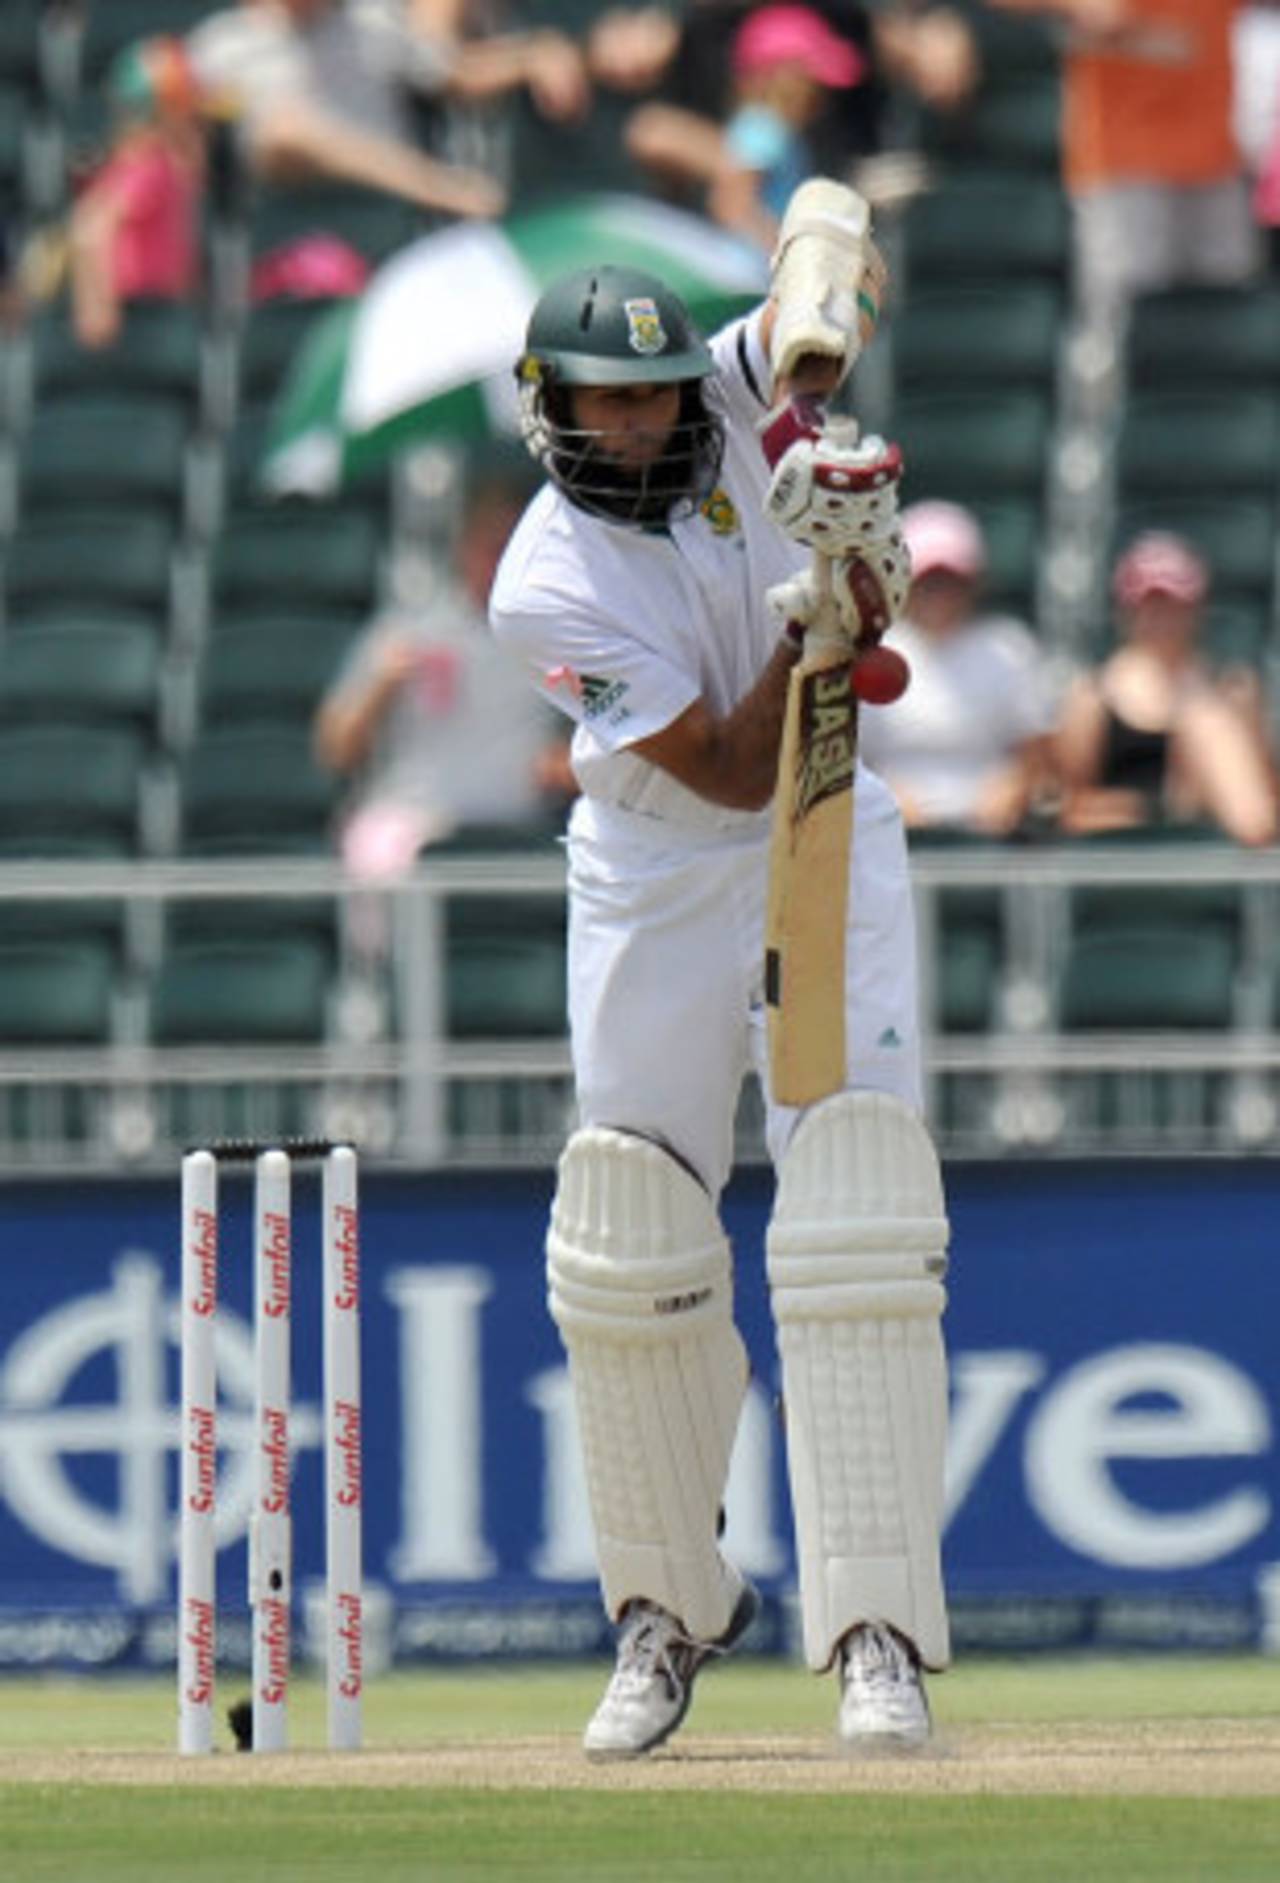 Hashim Amla defends off the back foot, South Africa v Australia, 2nd Test, Johannesburg, 3rd day, November 19, 2011